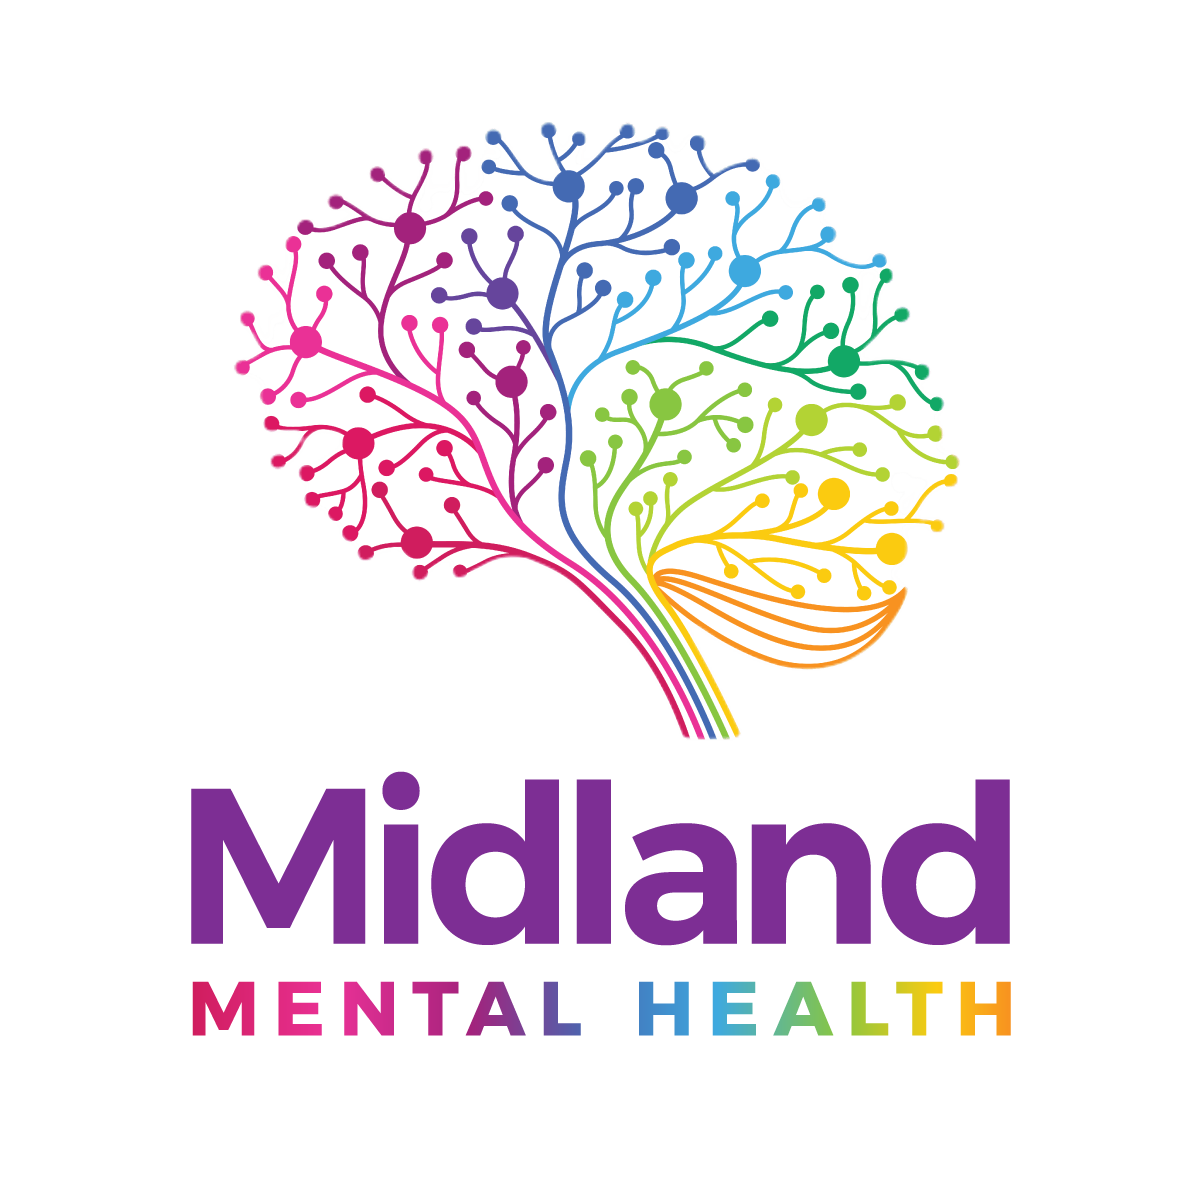 Midland Mental Health Services